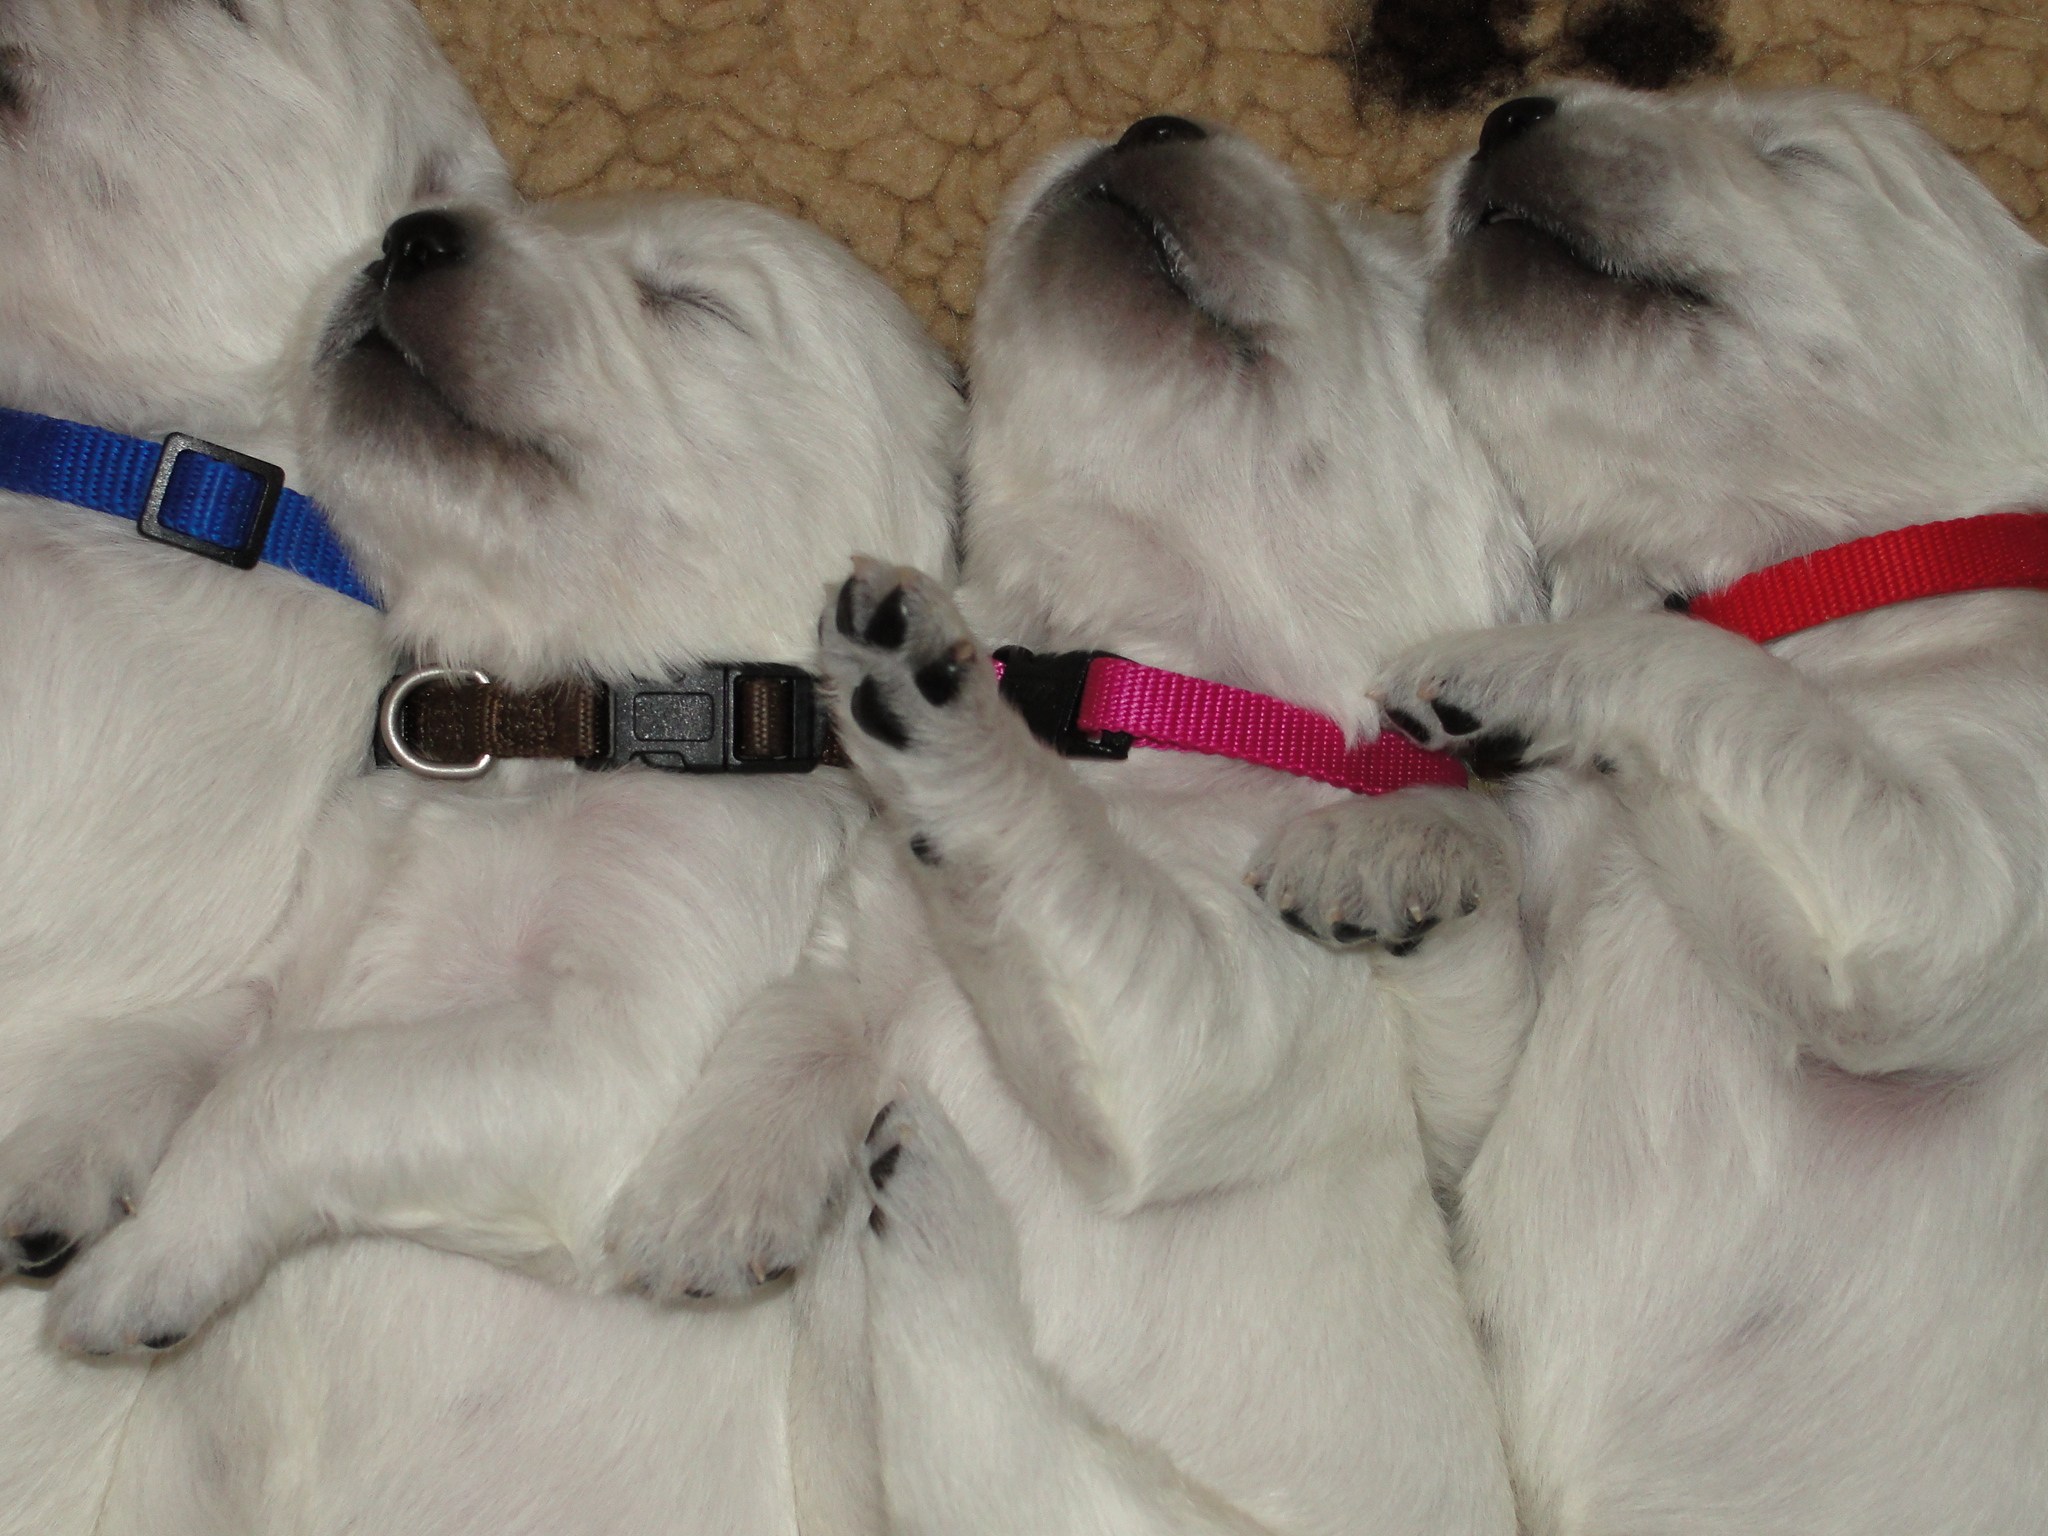 Puppies after their massage